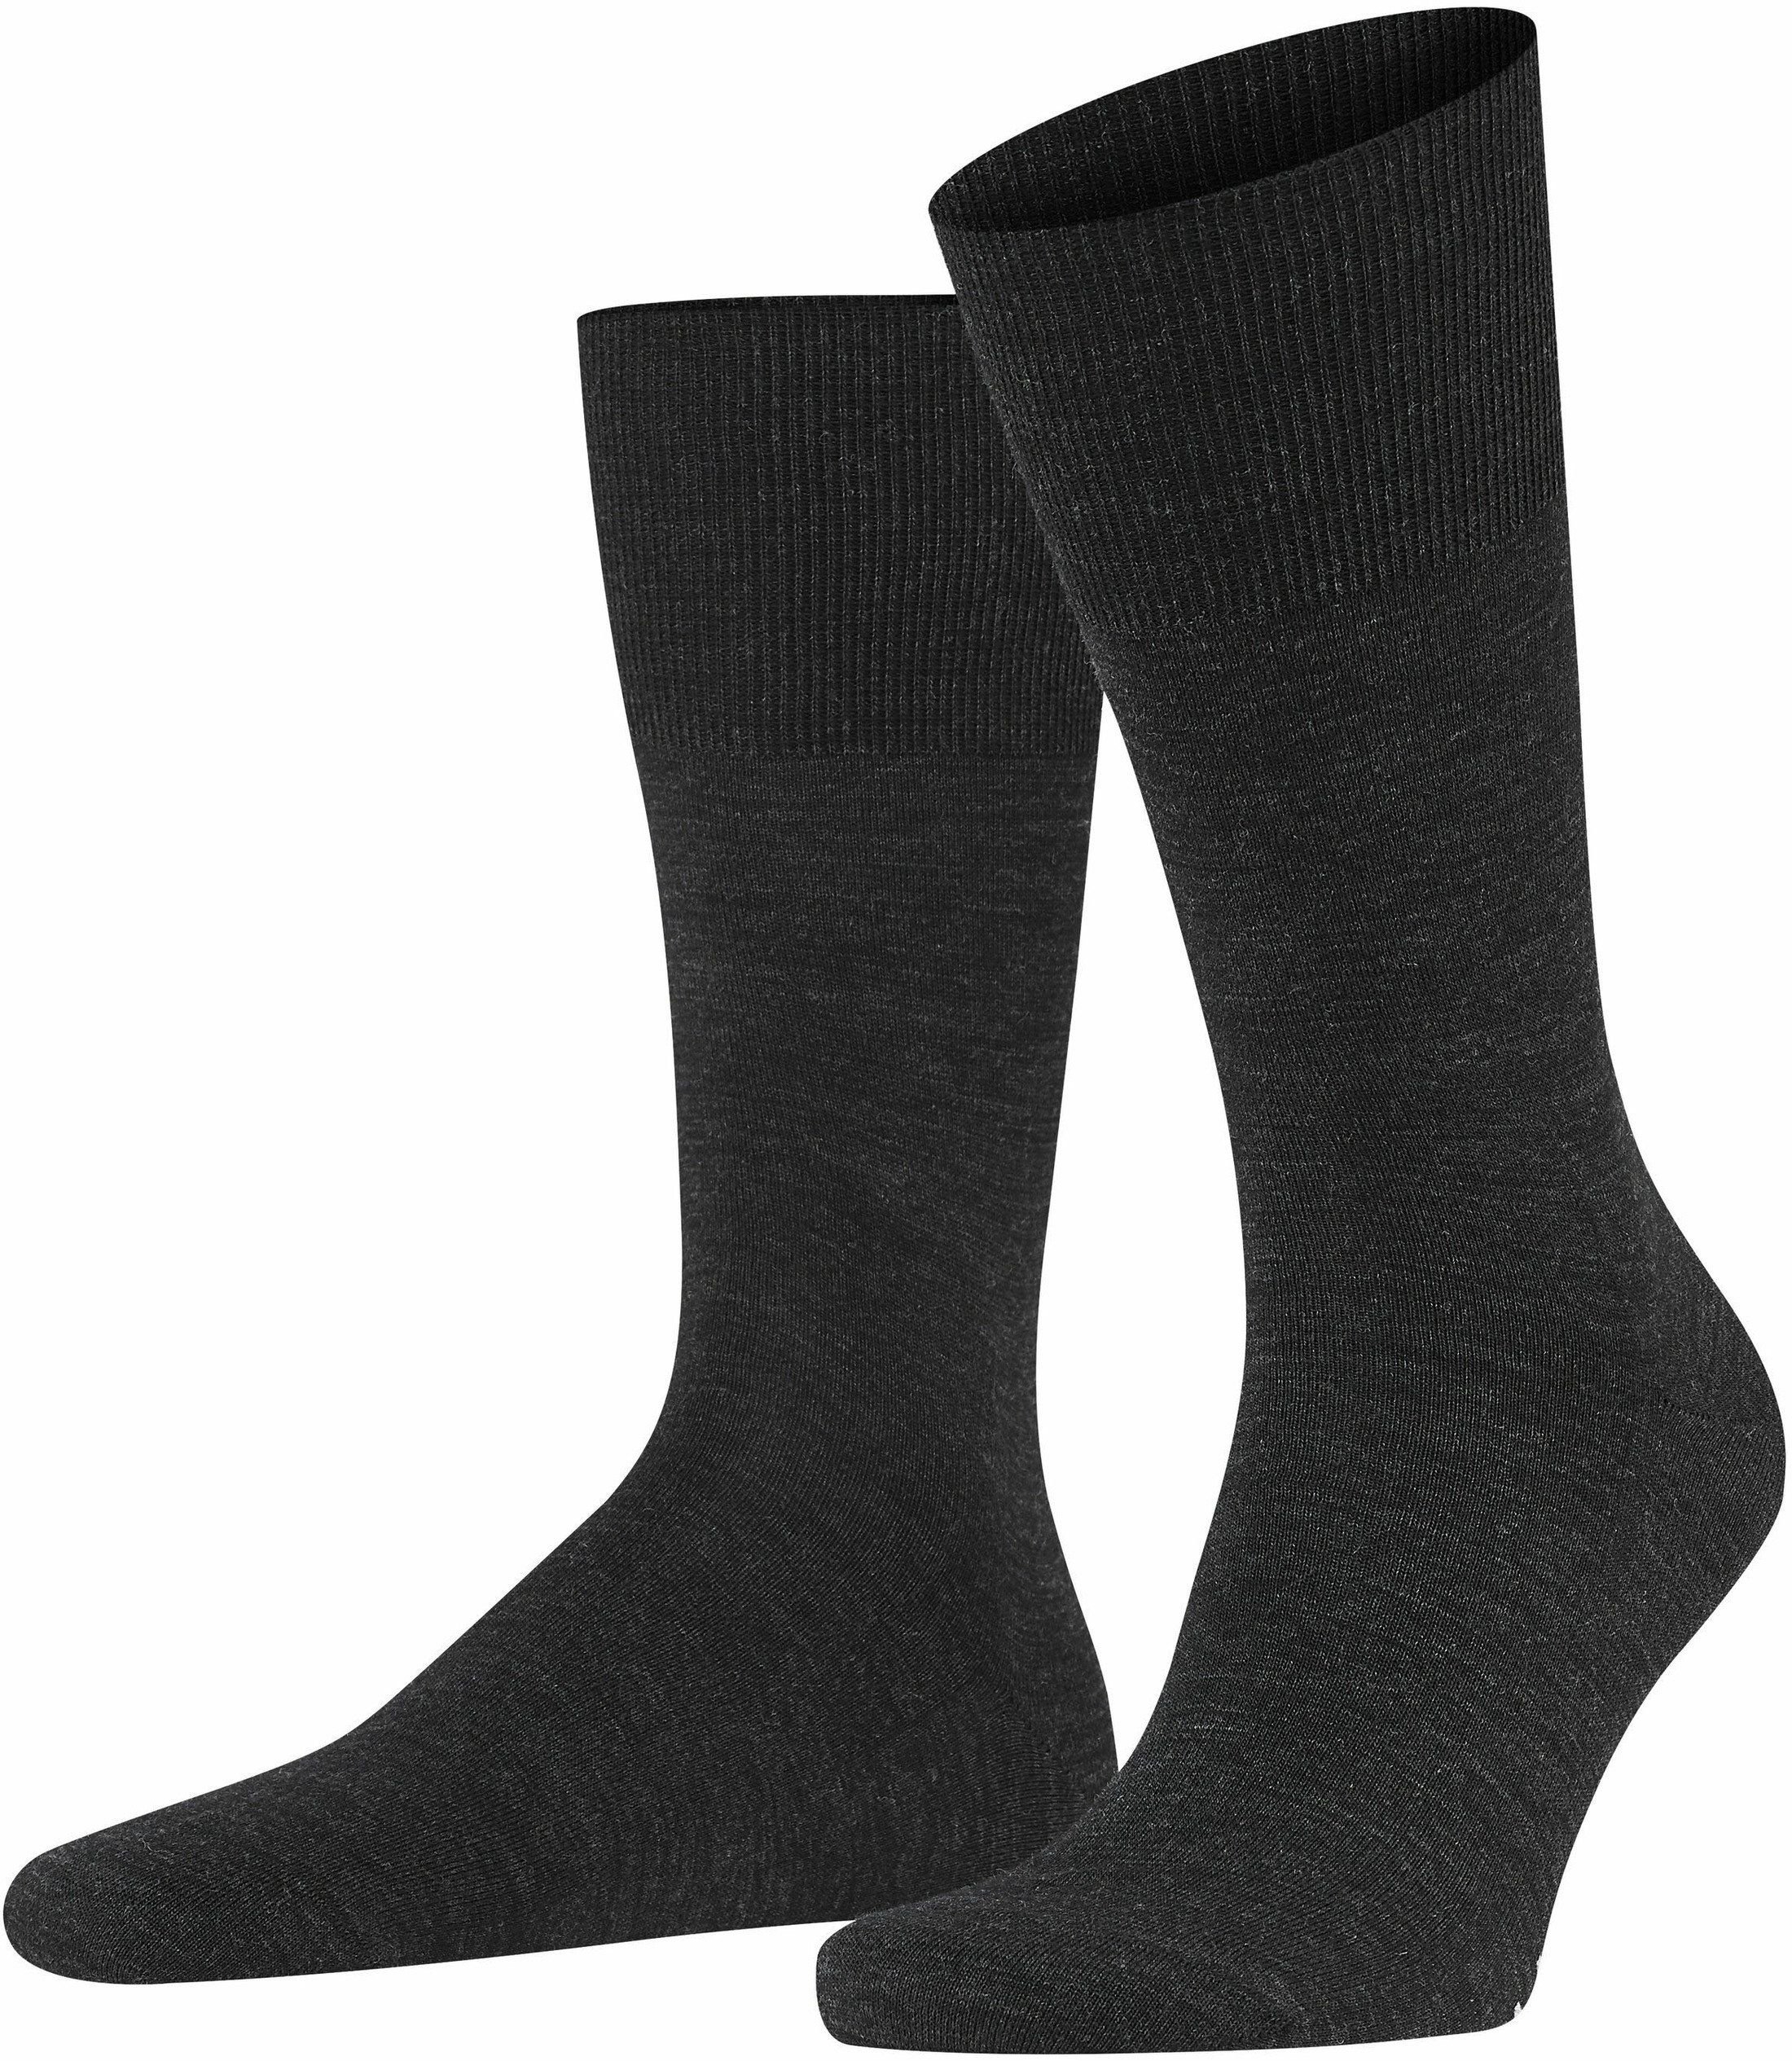 Falke Airport Sock Dark 3080 Dark Grey Grey size 39-40